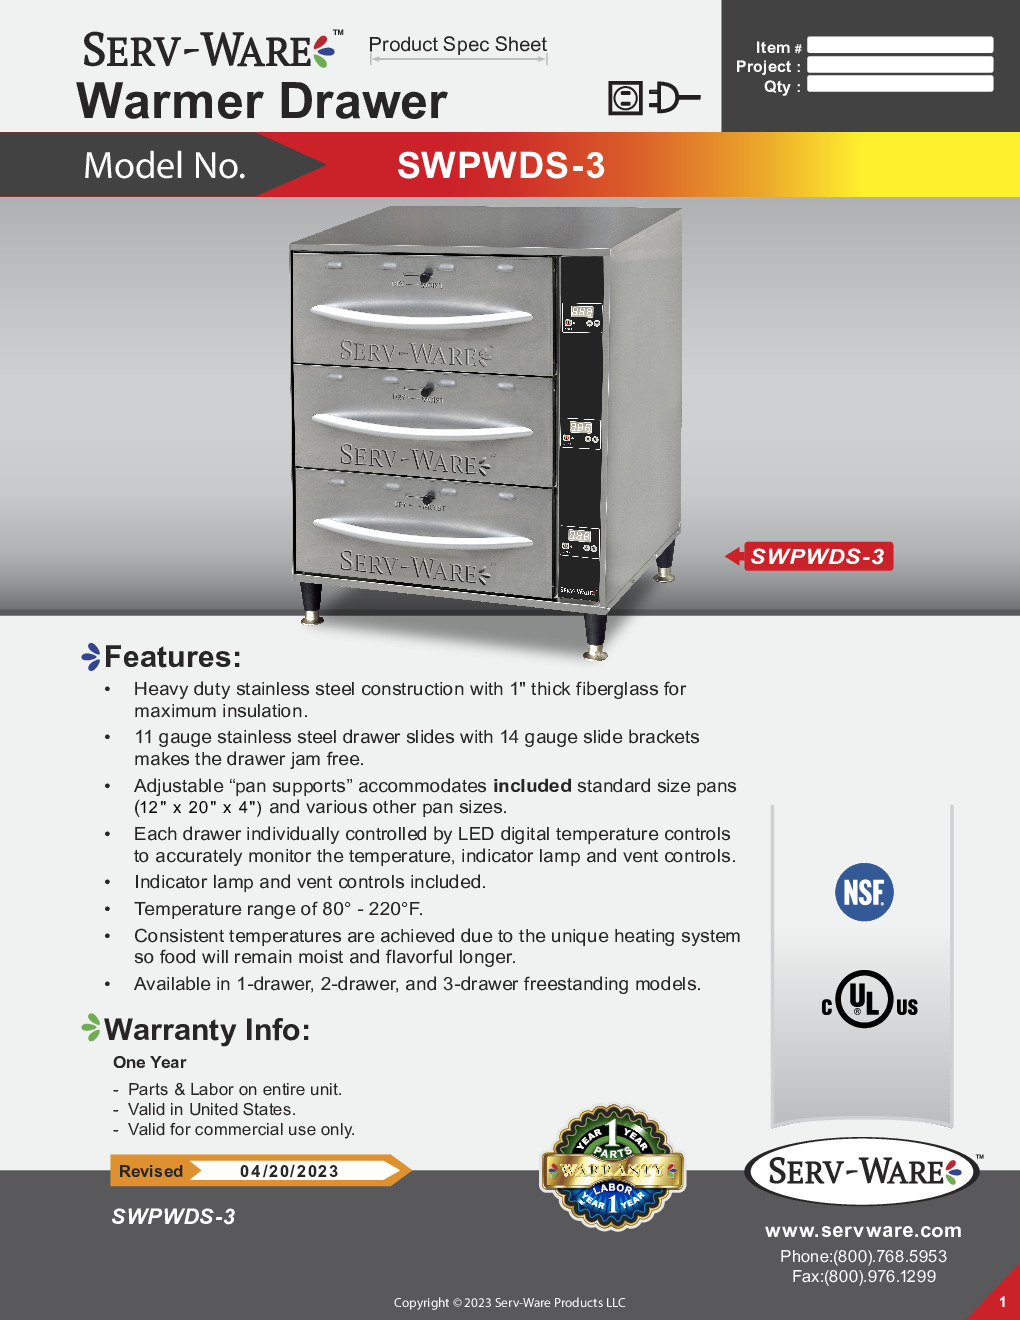 Serv-Ware SWPWDS-3 Free Standing Warming Drawer